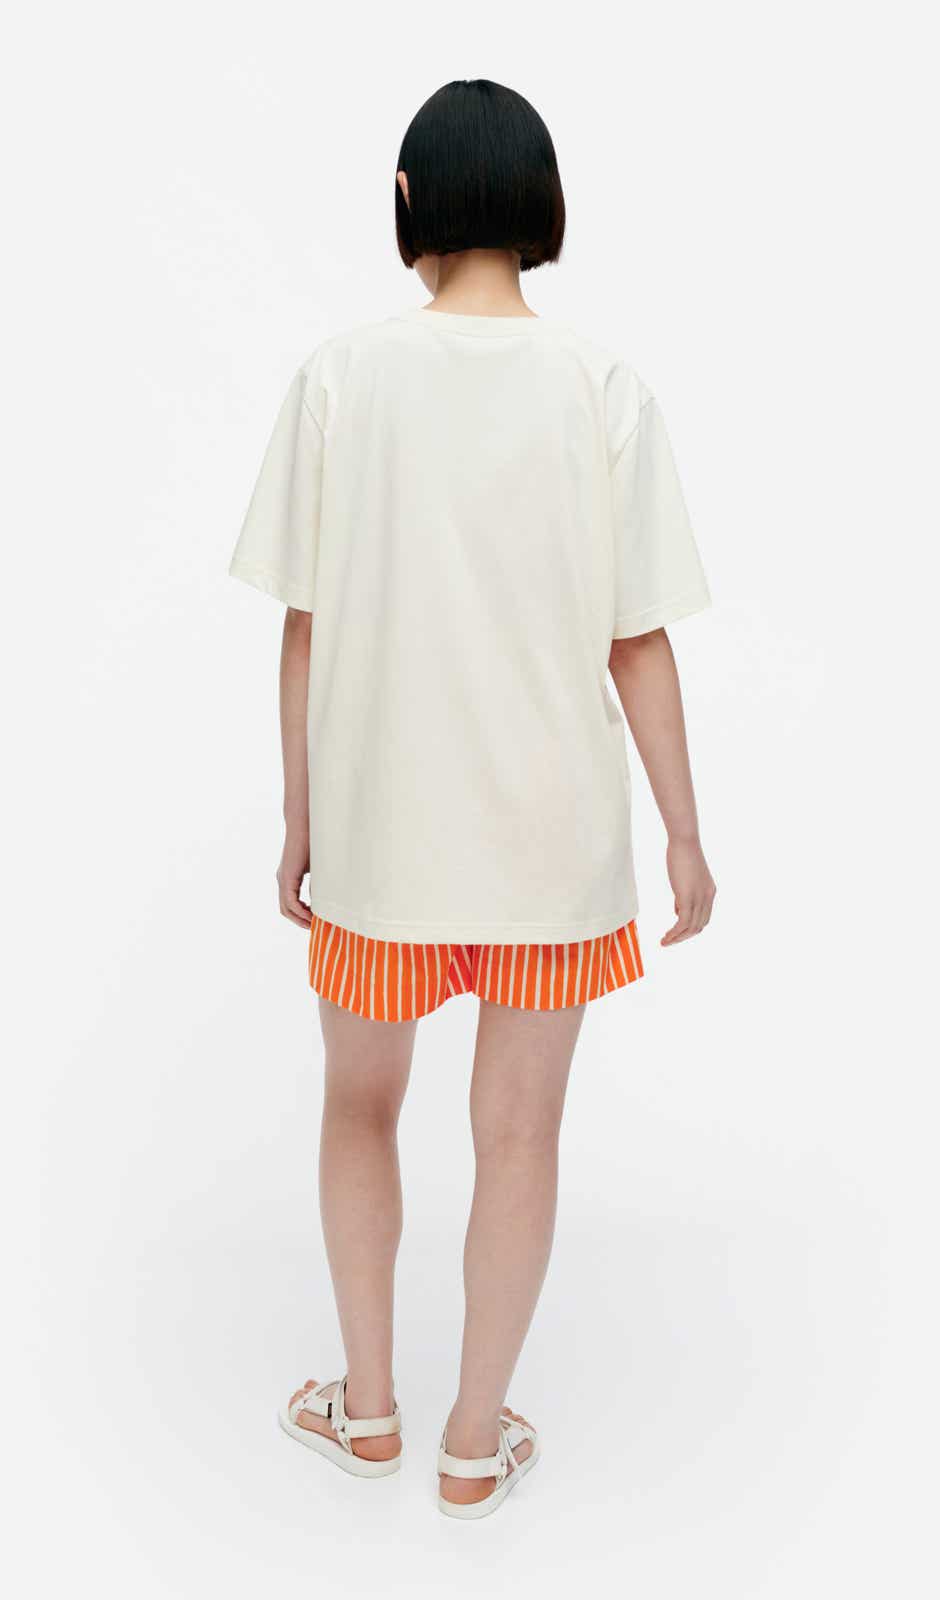  Kioski Embla Unikko Placement t-shirt – organic cotton jersey